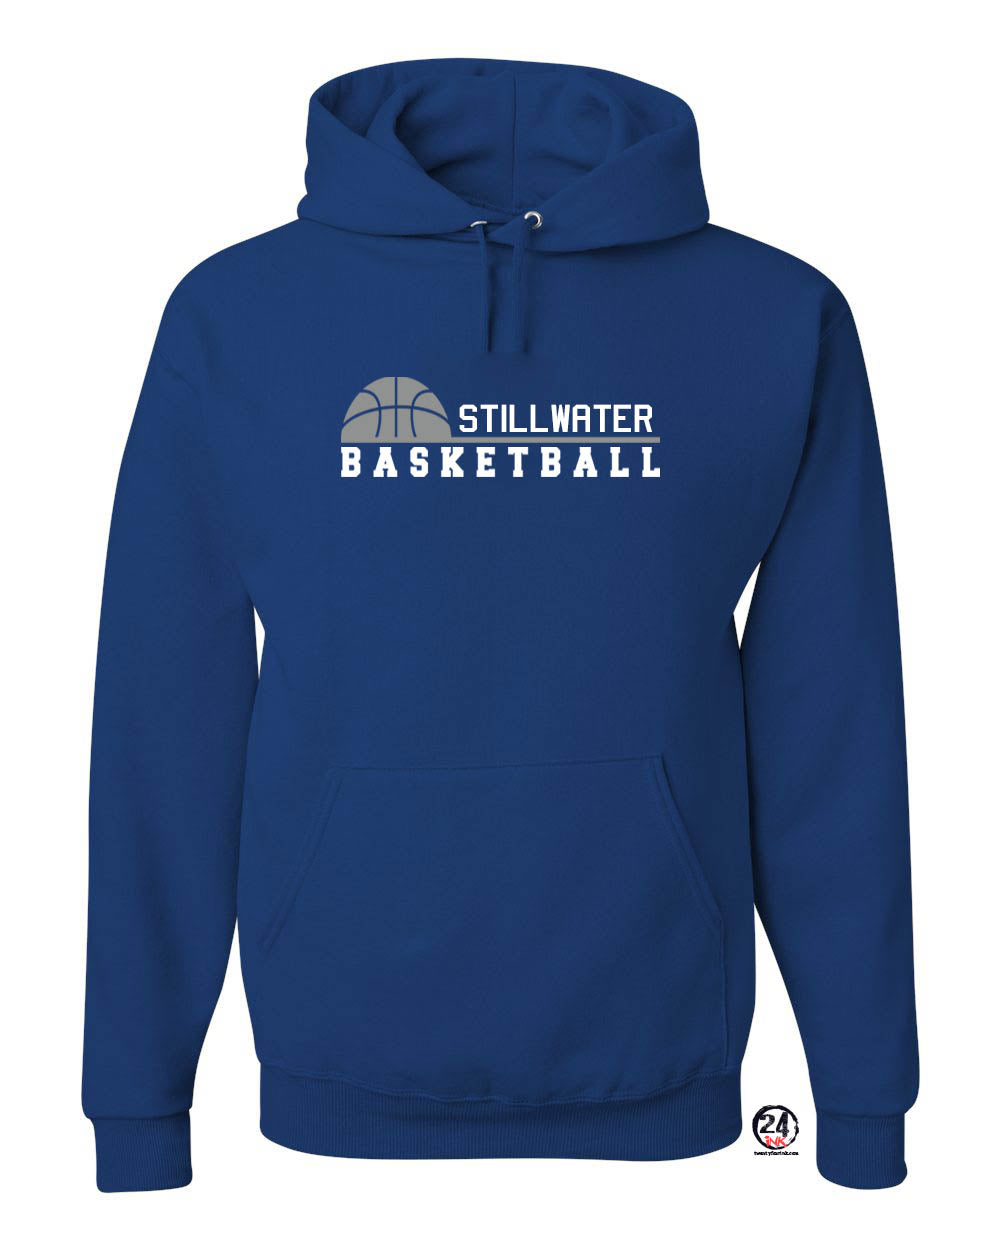 Stillwater Basketball Ball Hooded Sweatshirt